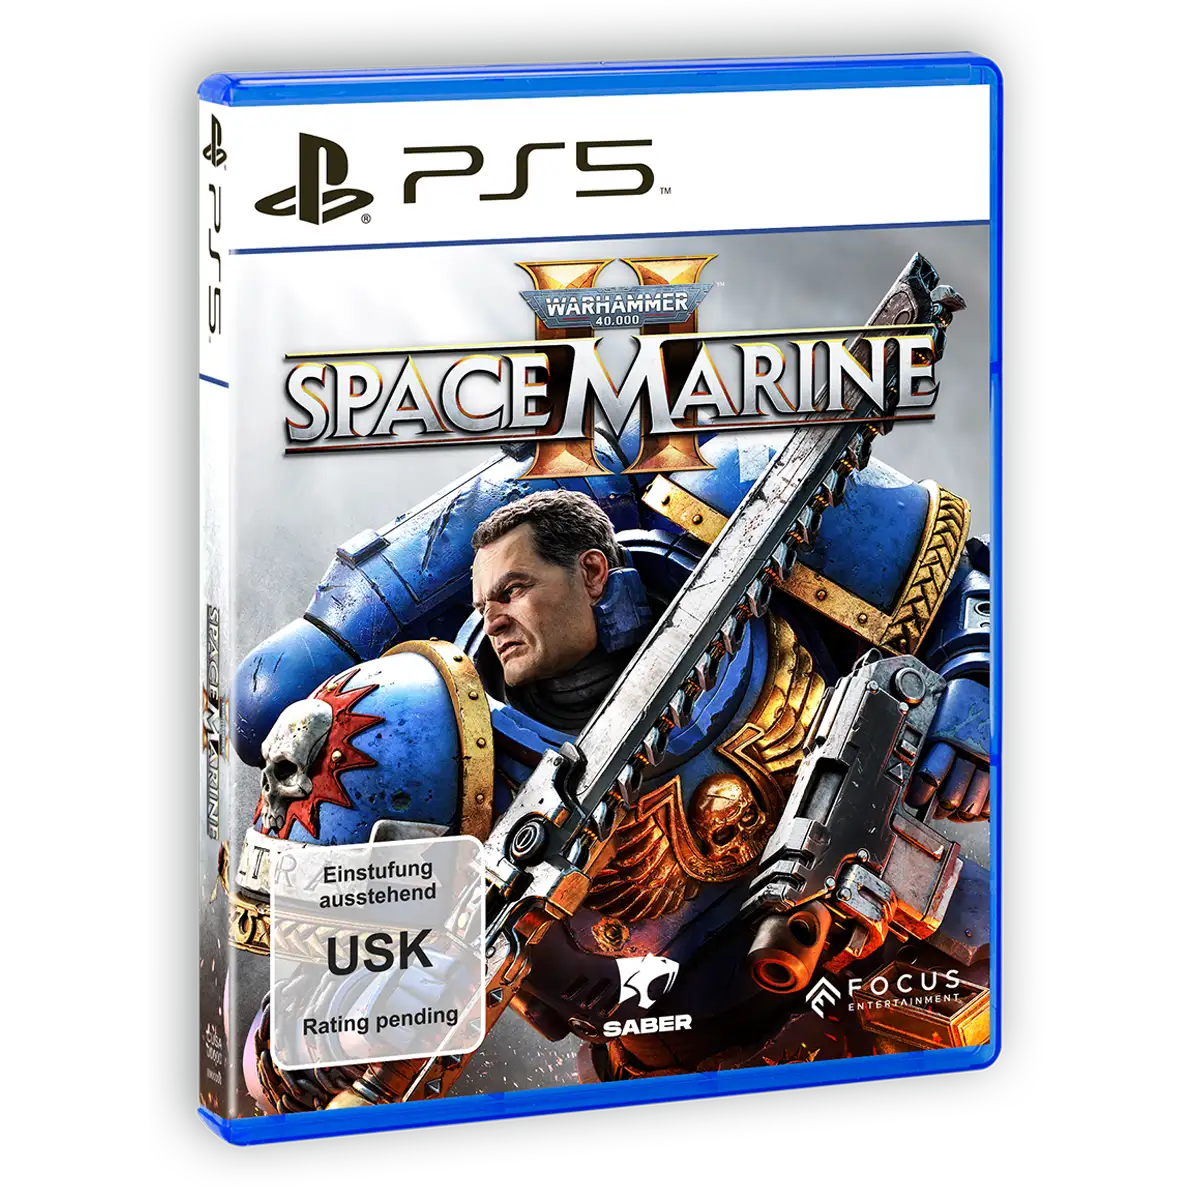 Warhammer 40,000: Space Marine 2 (PS5) (USK) Image 2